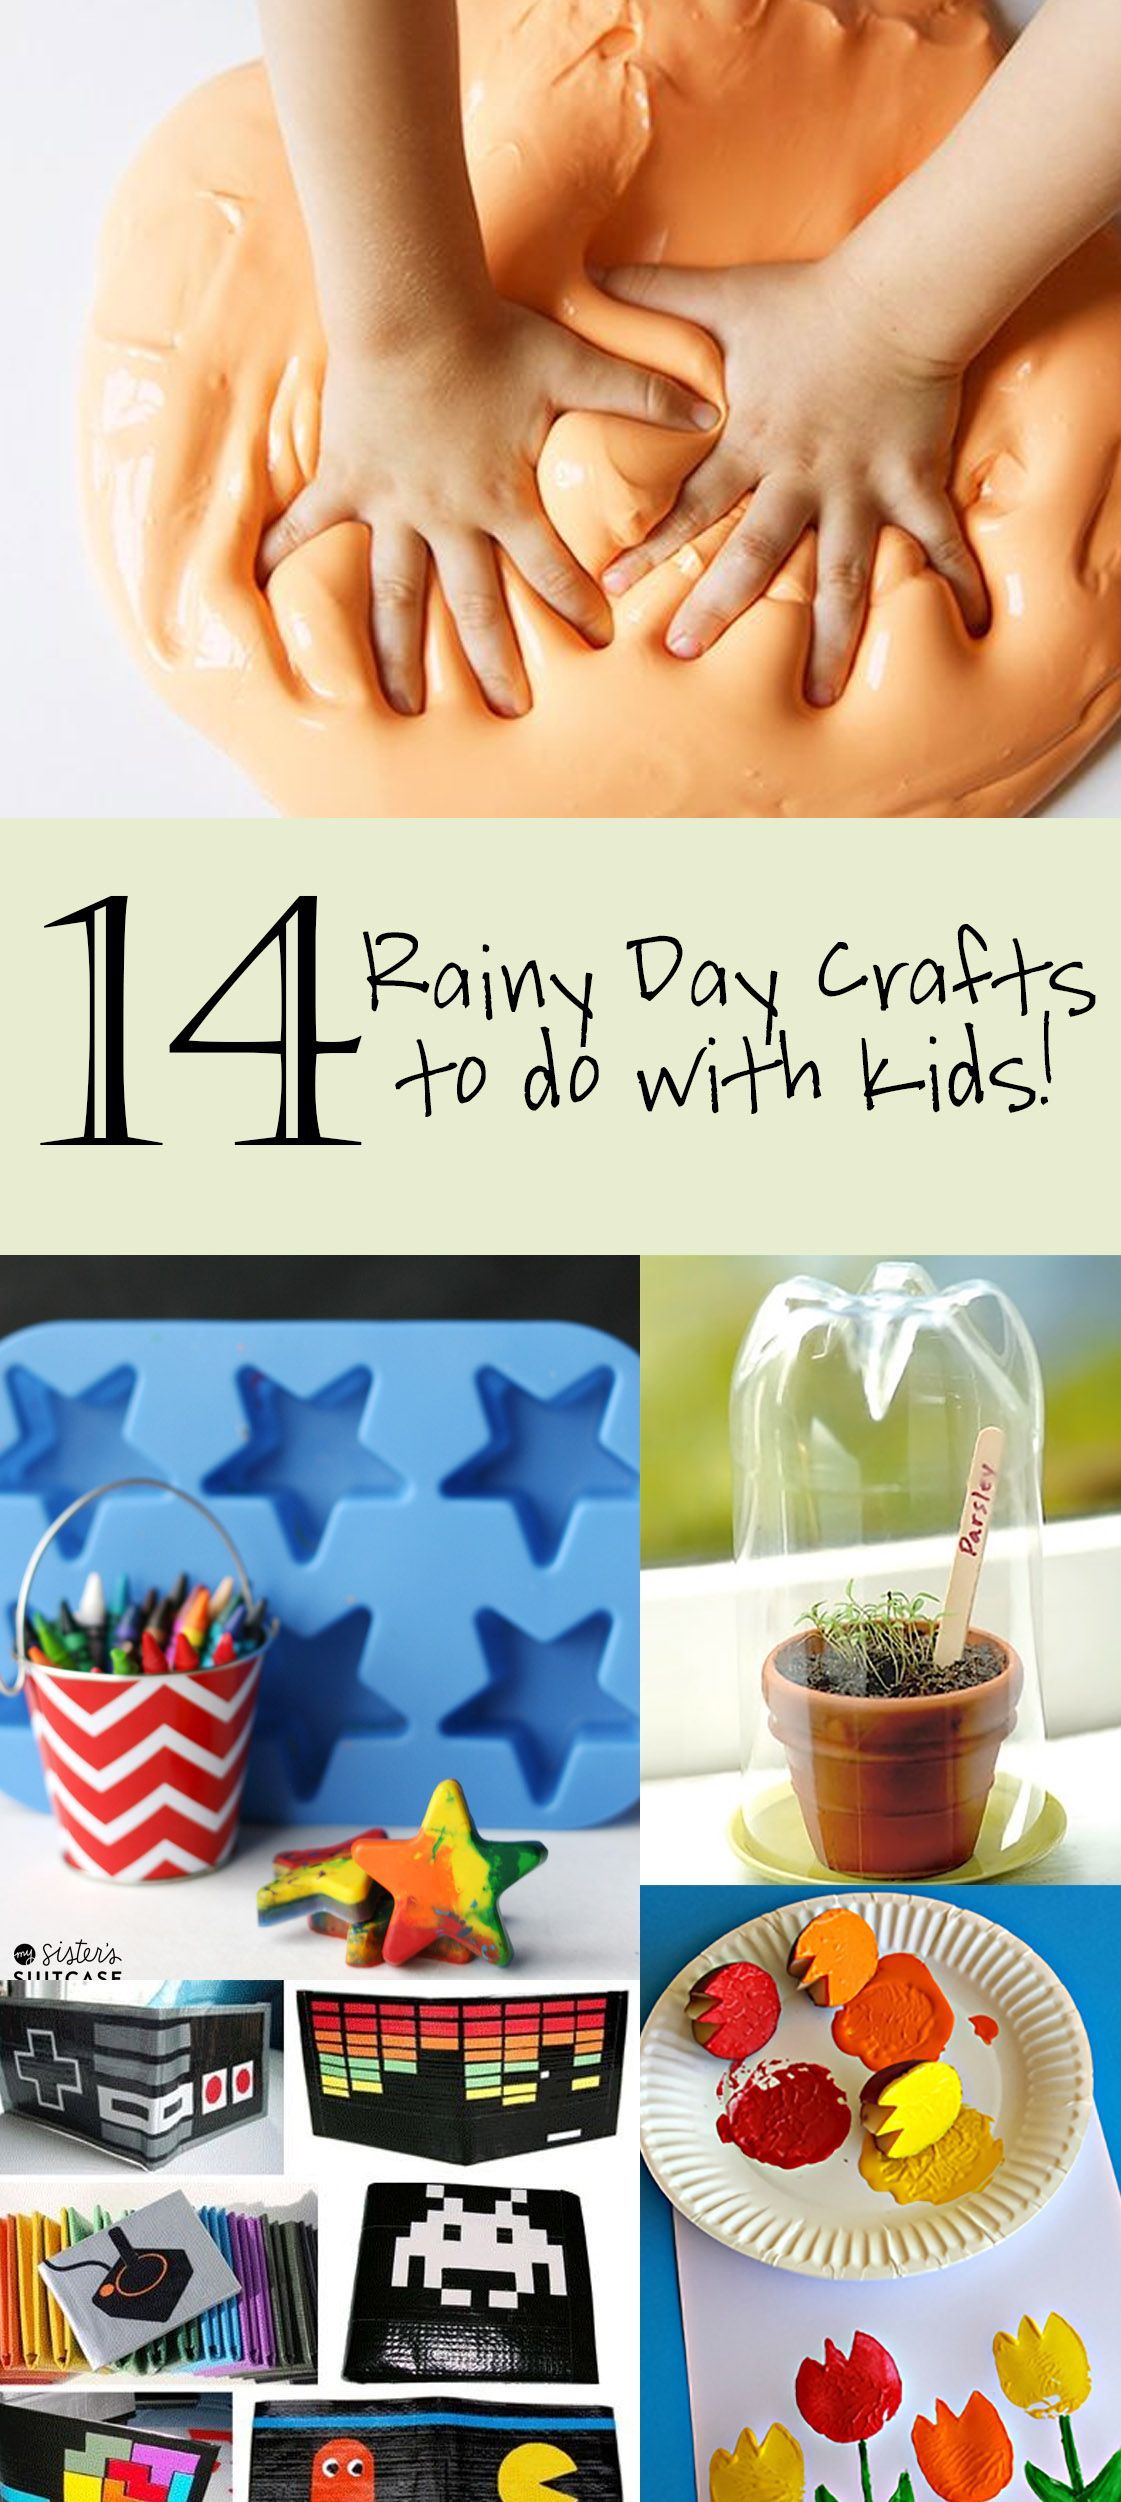 14 Rainy Day Crafts to do with Kids!